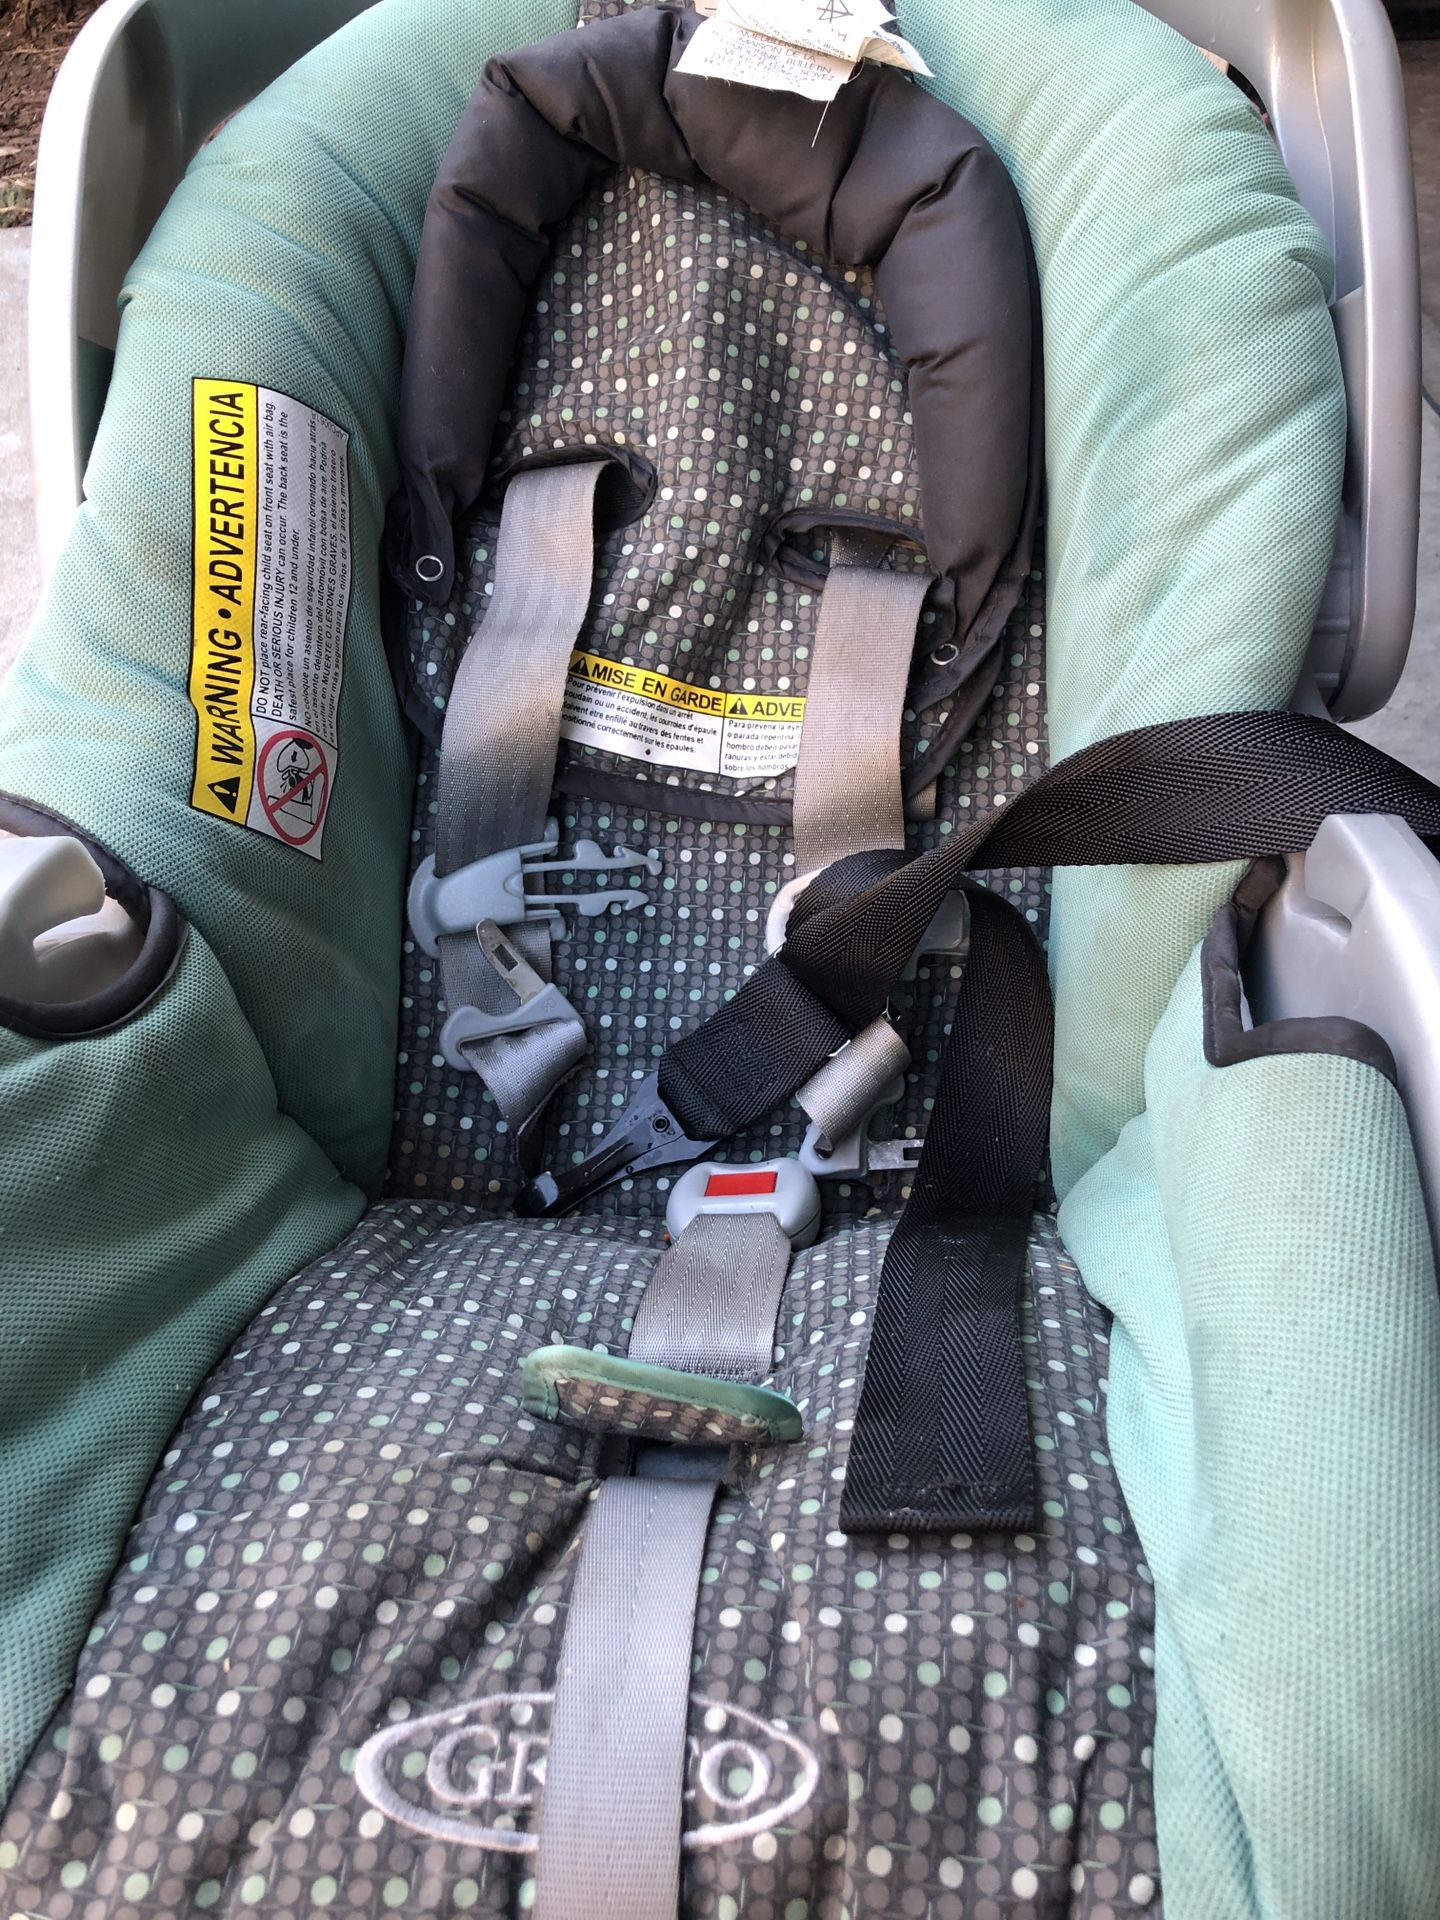 Graco car seat - infant